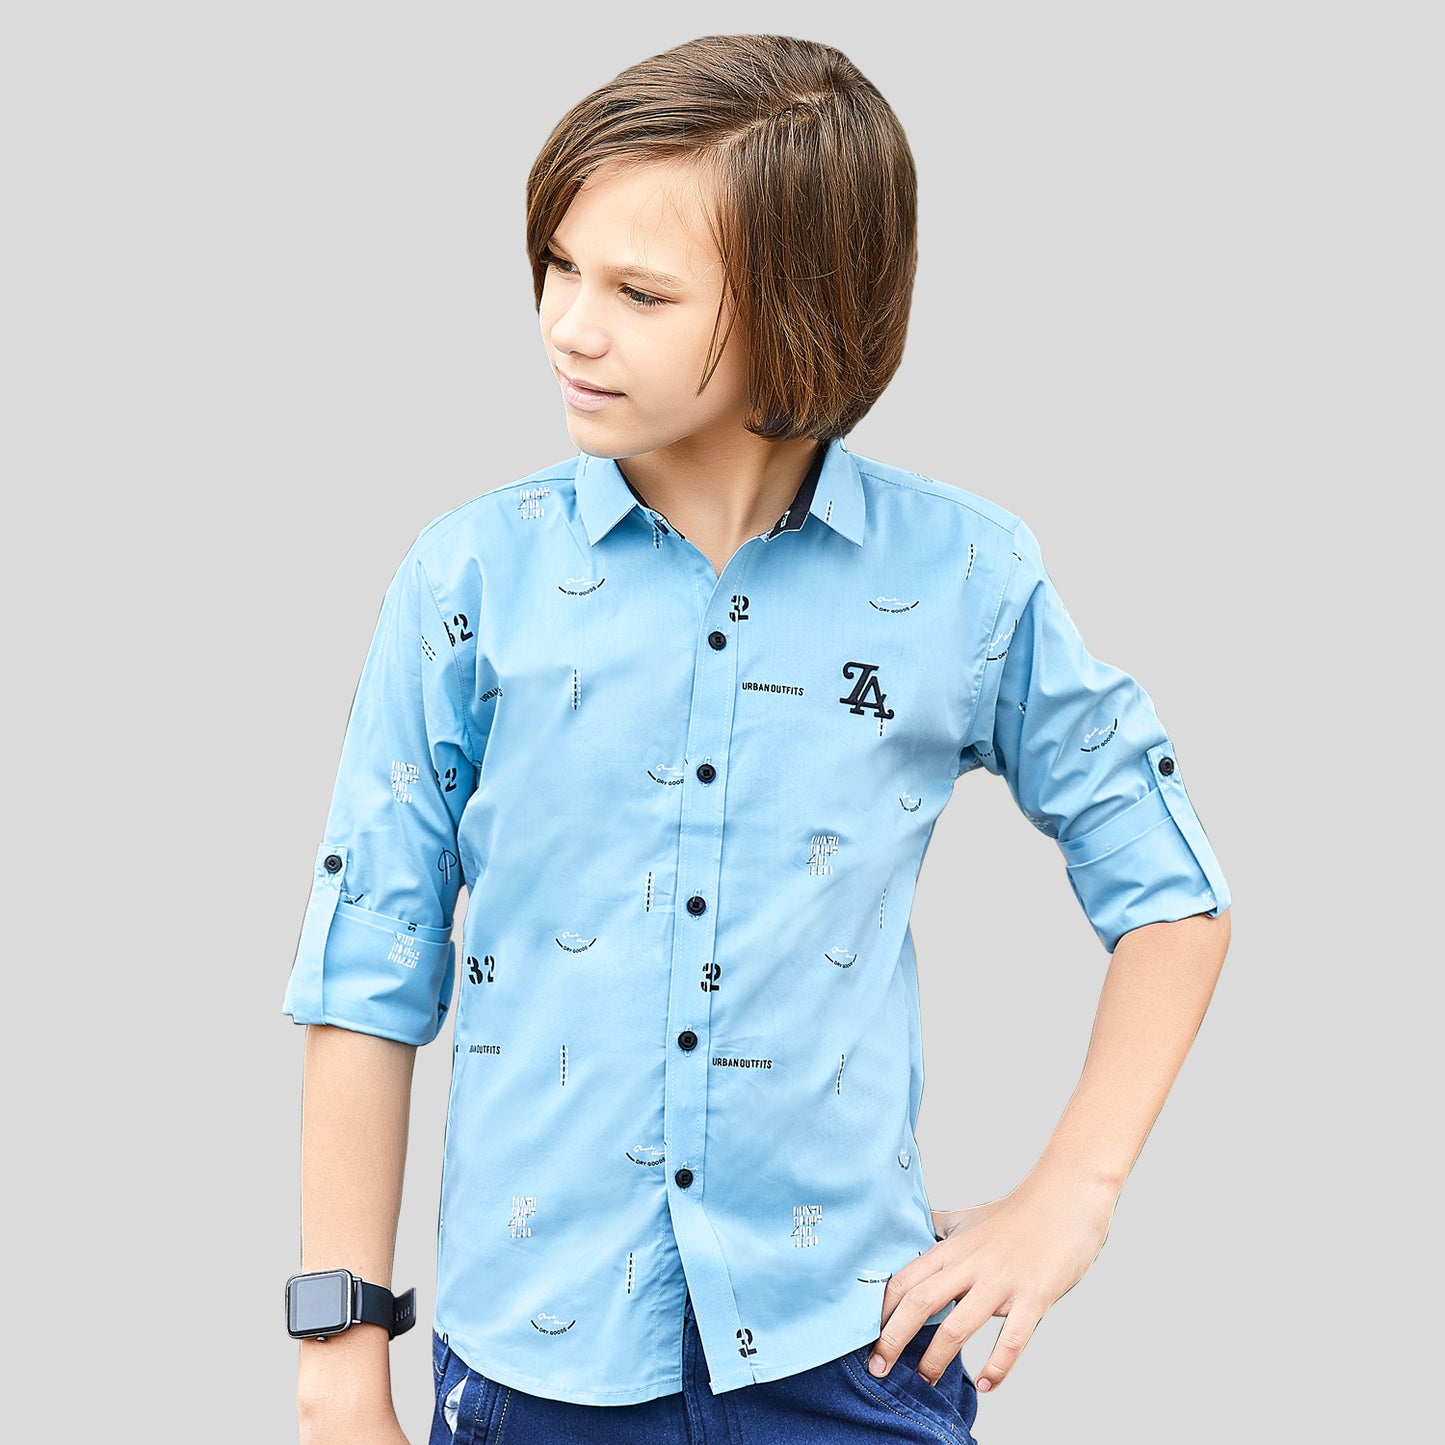 Stylish Printed Satin Lycra Shirt For Young Boys.